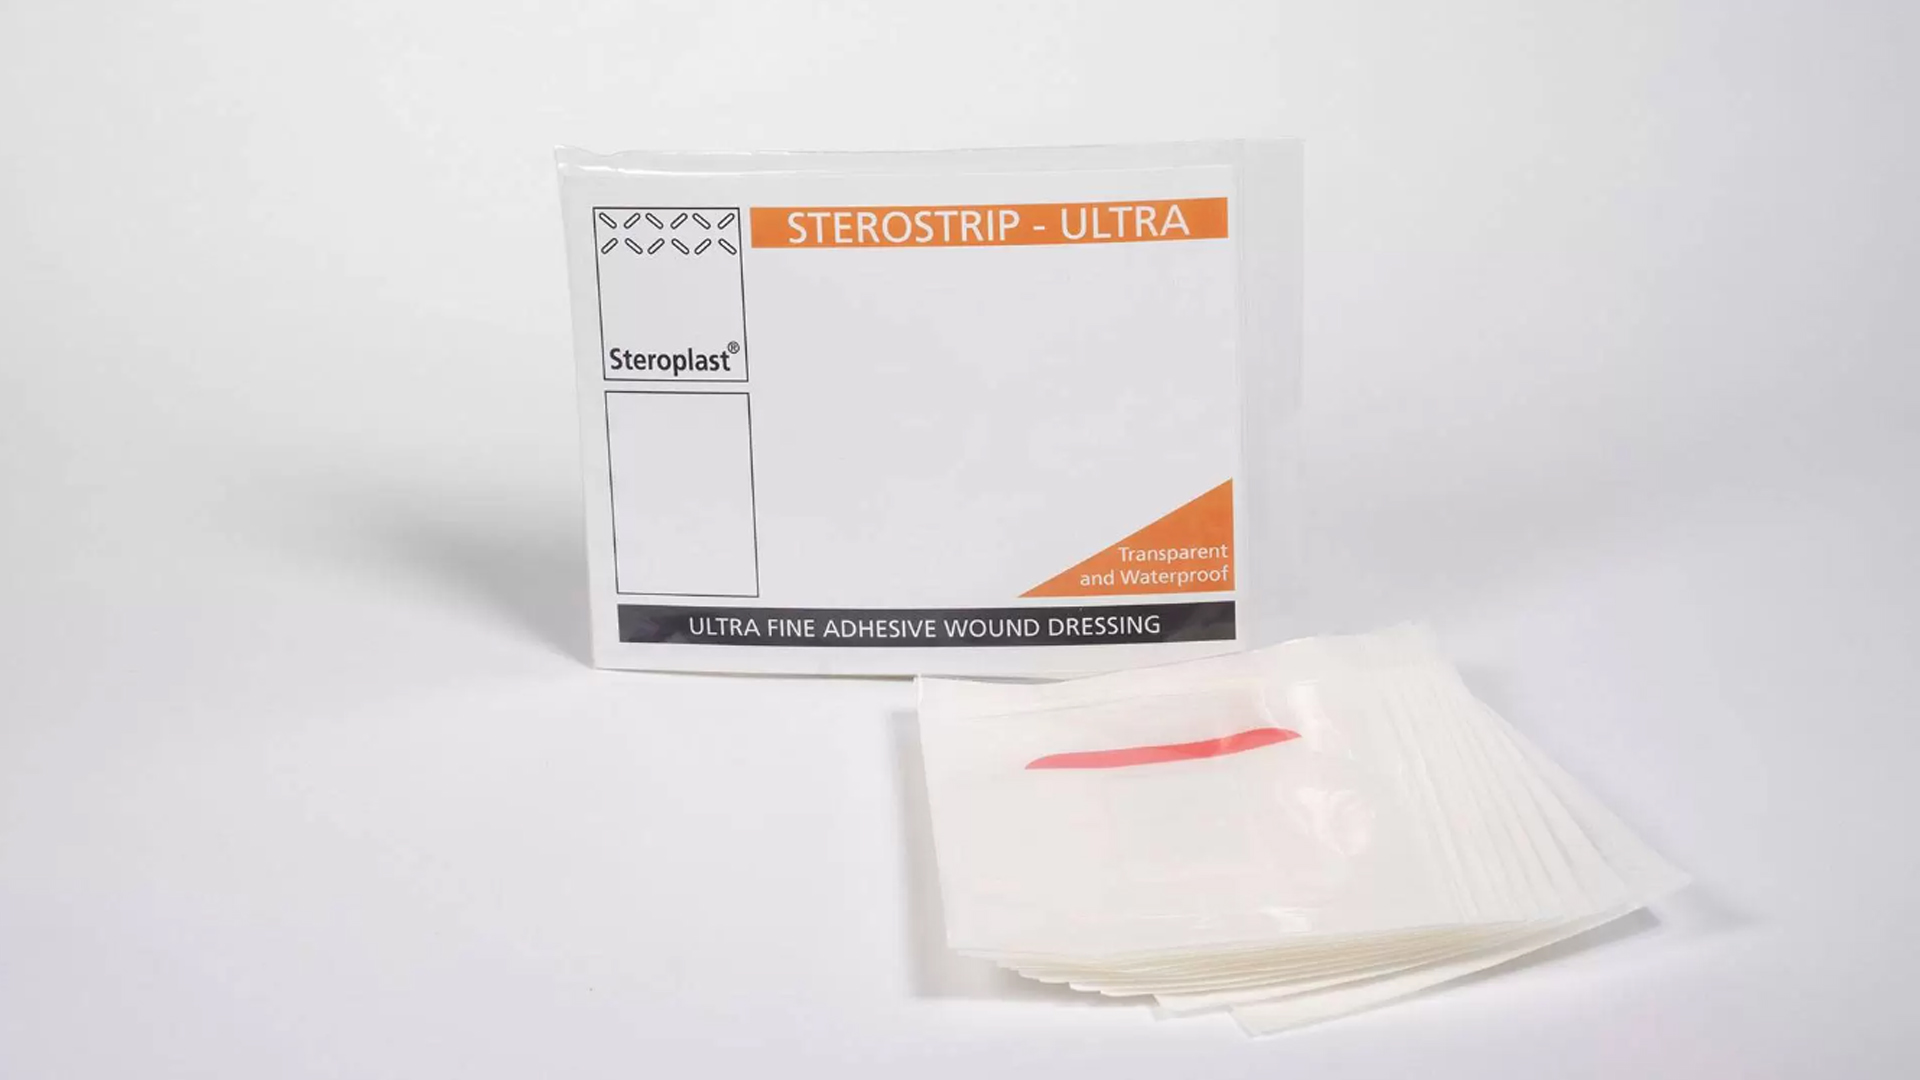 Sterostrip Ultra Waterproof Adhesive Wound Dressing